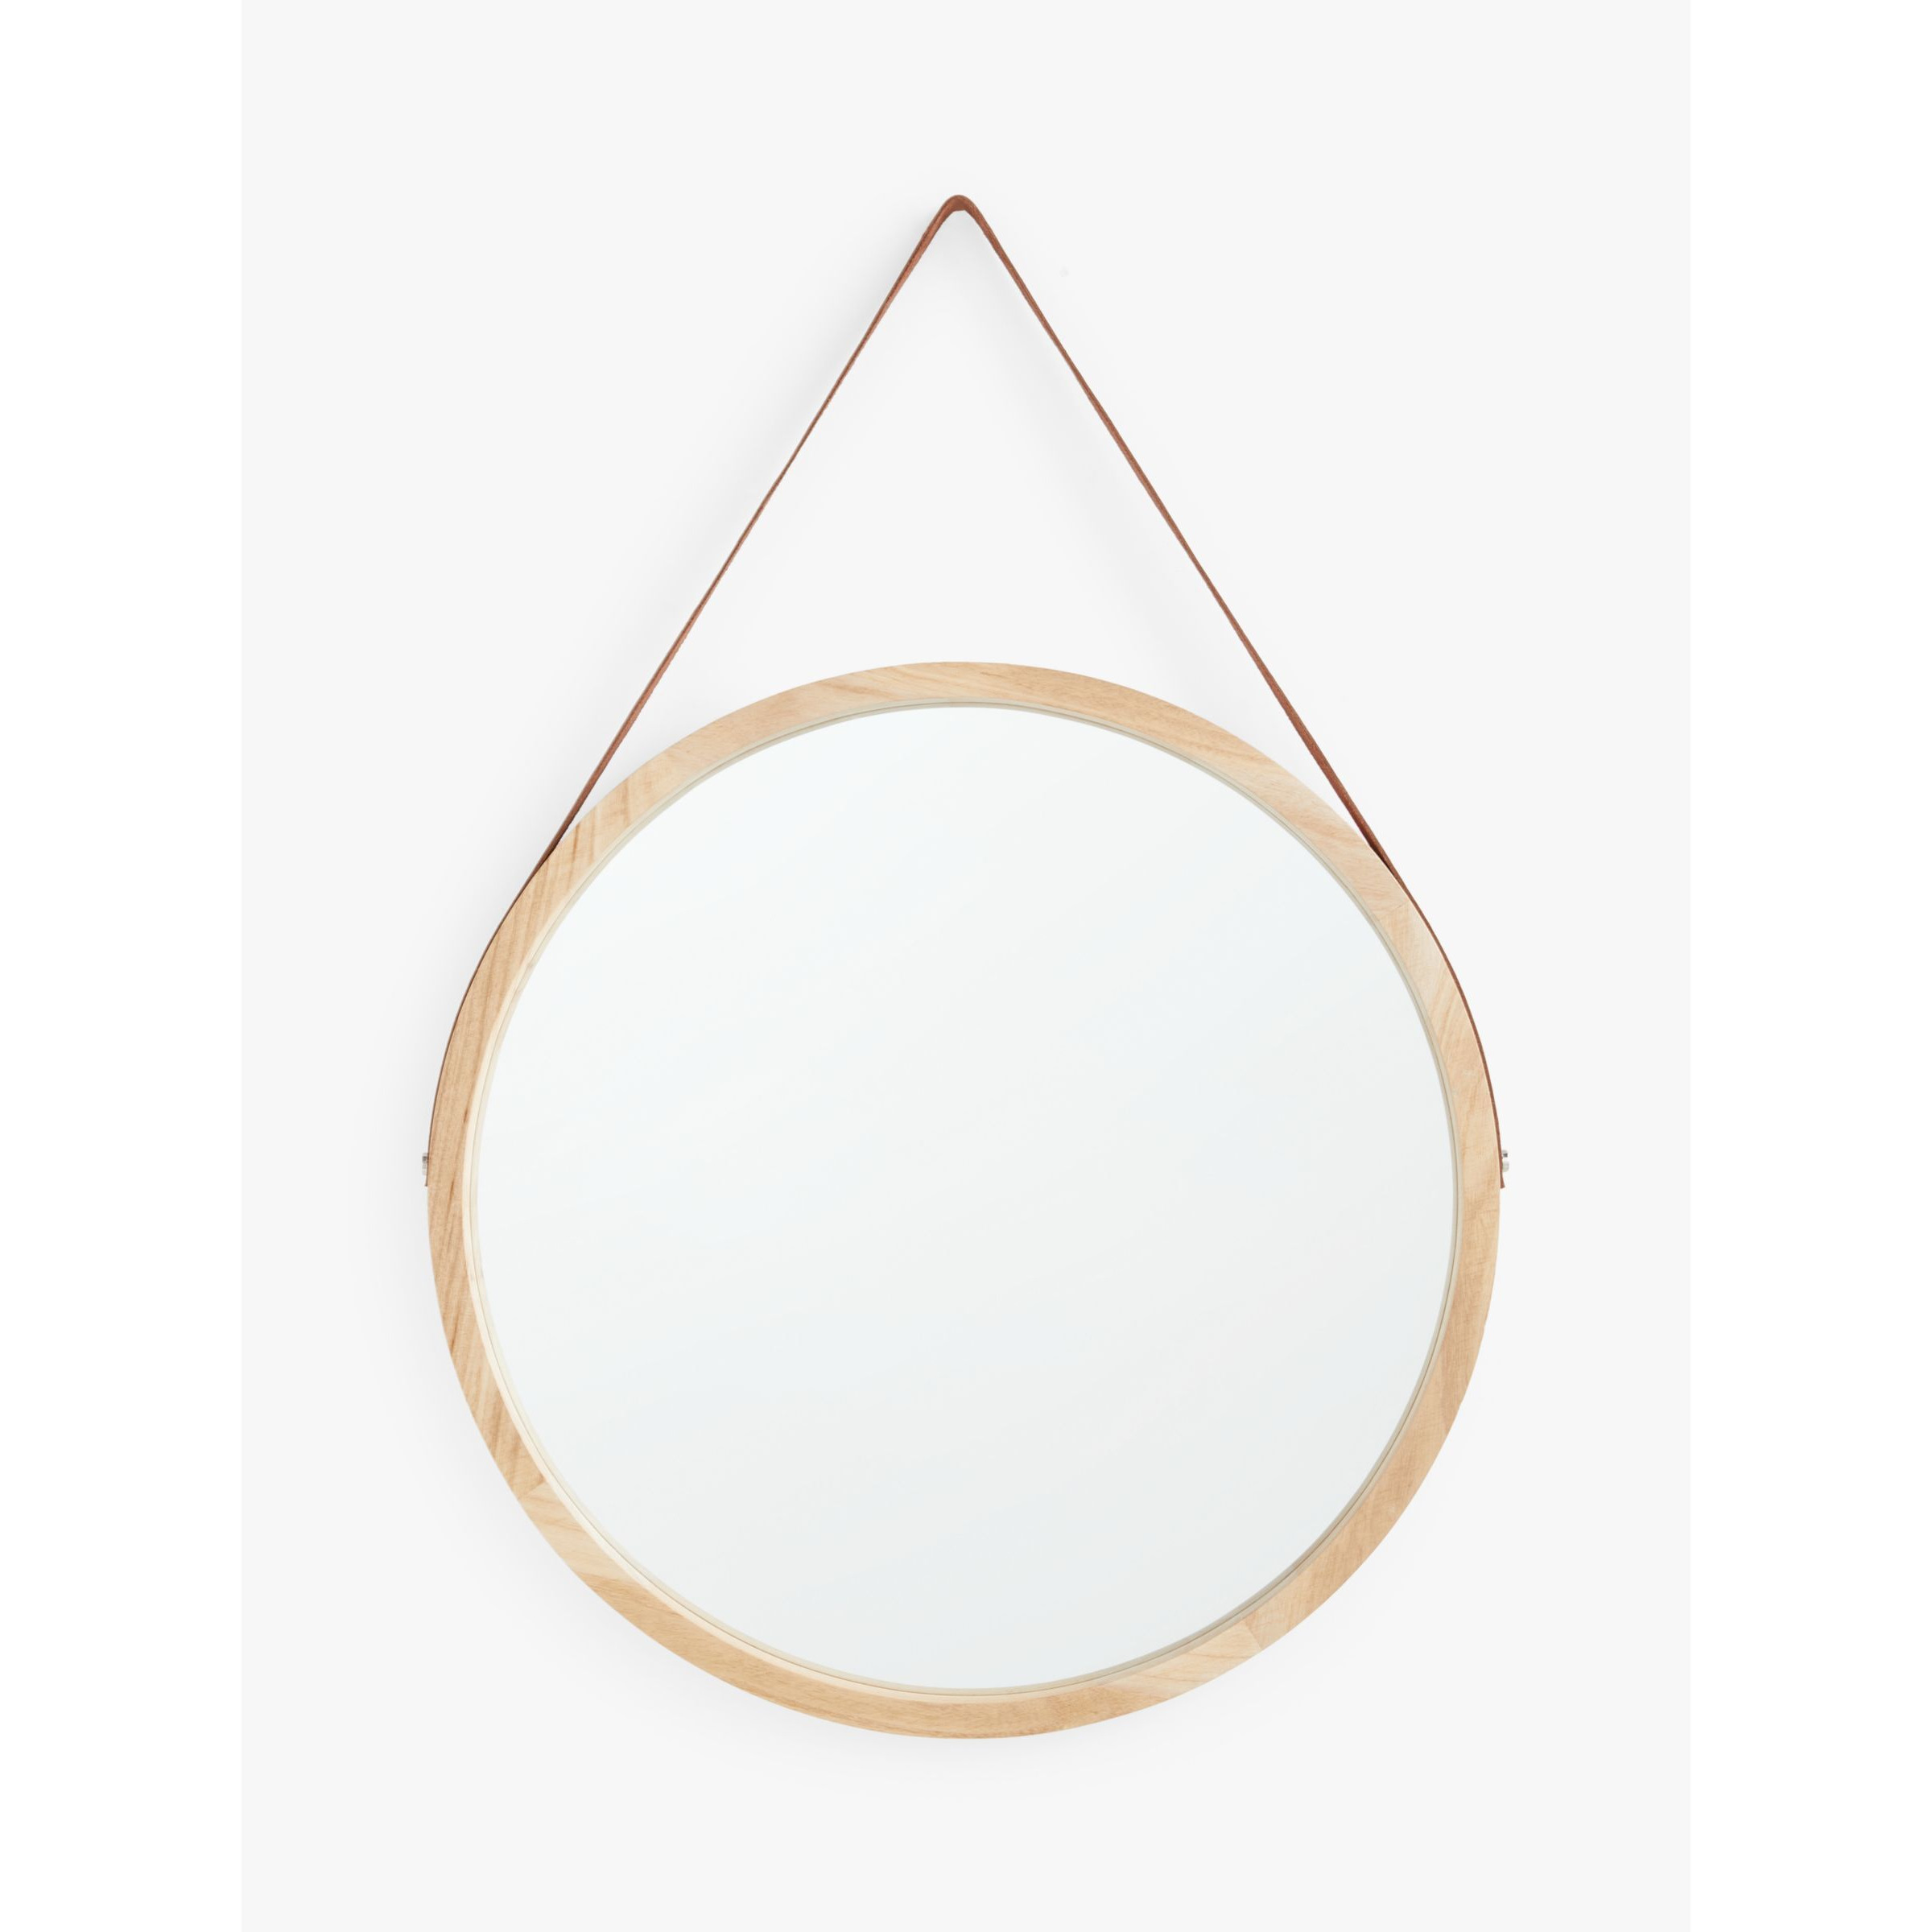 John Lewis ANYDAY Wood Frame Round Hanging Wall Mirror, 55cm, Natural - image 1